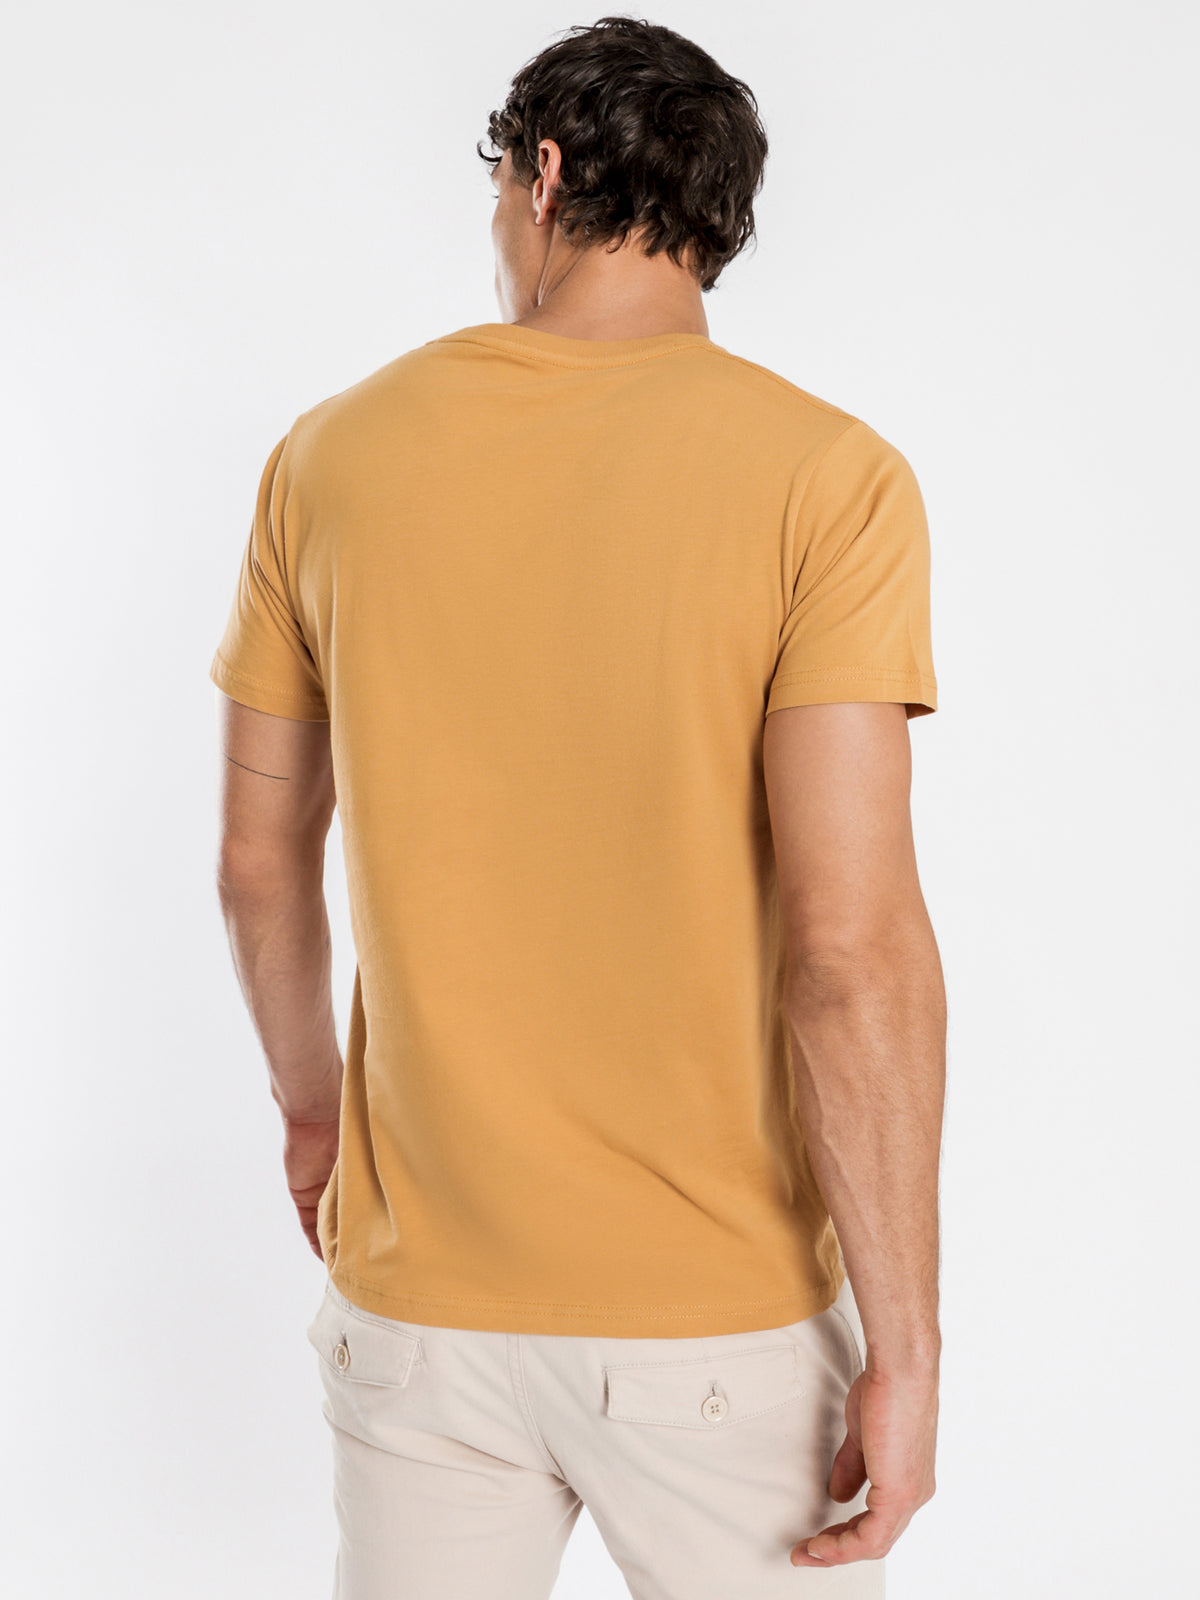 Basic Crew Short Sleeve T-Shirt in Mustard